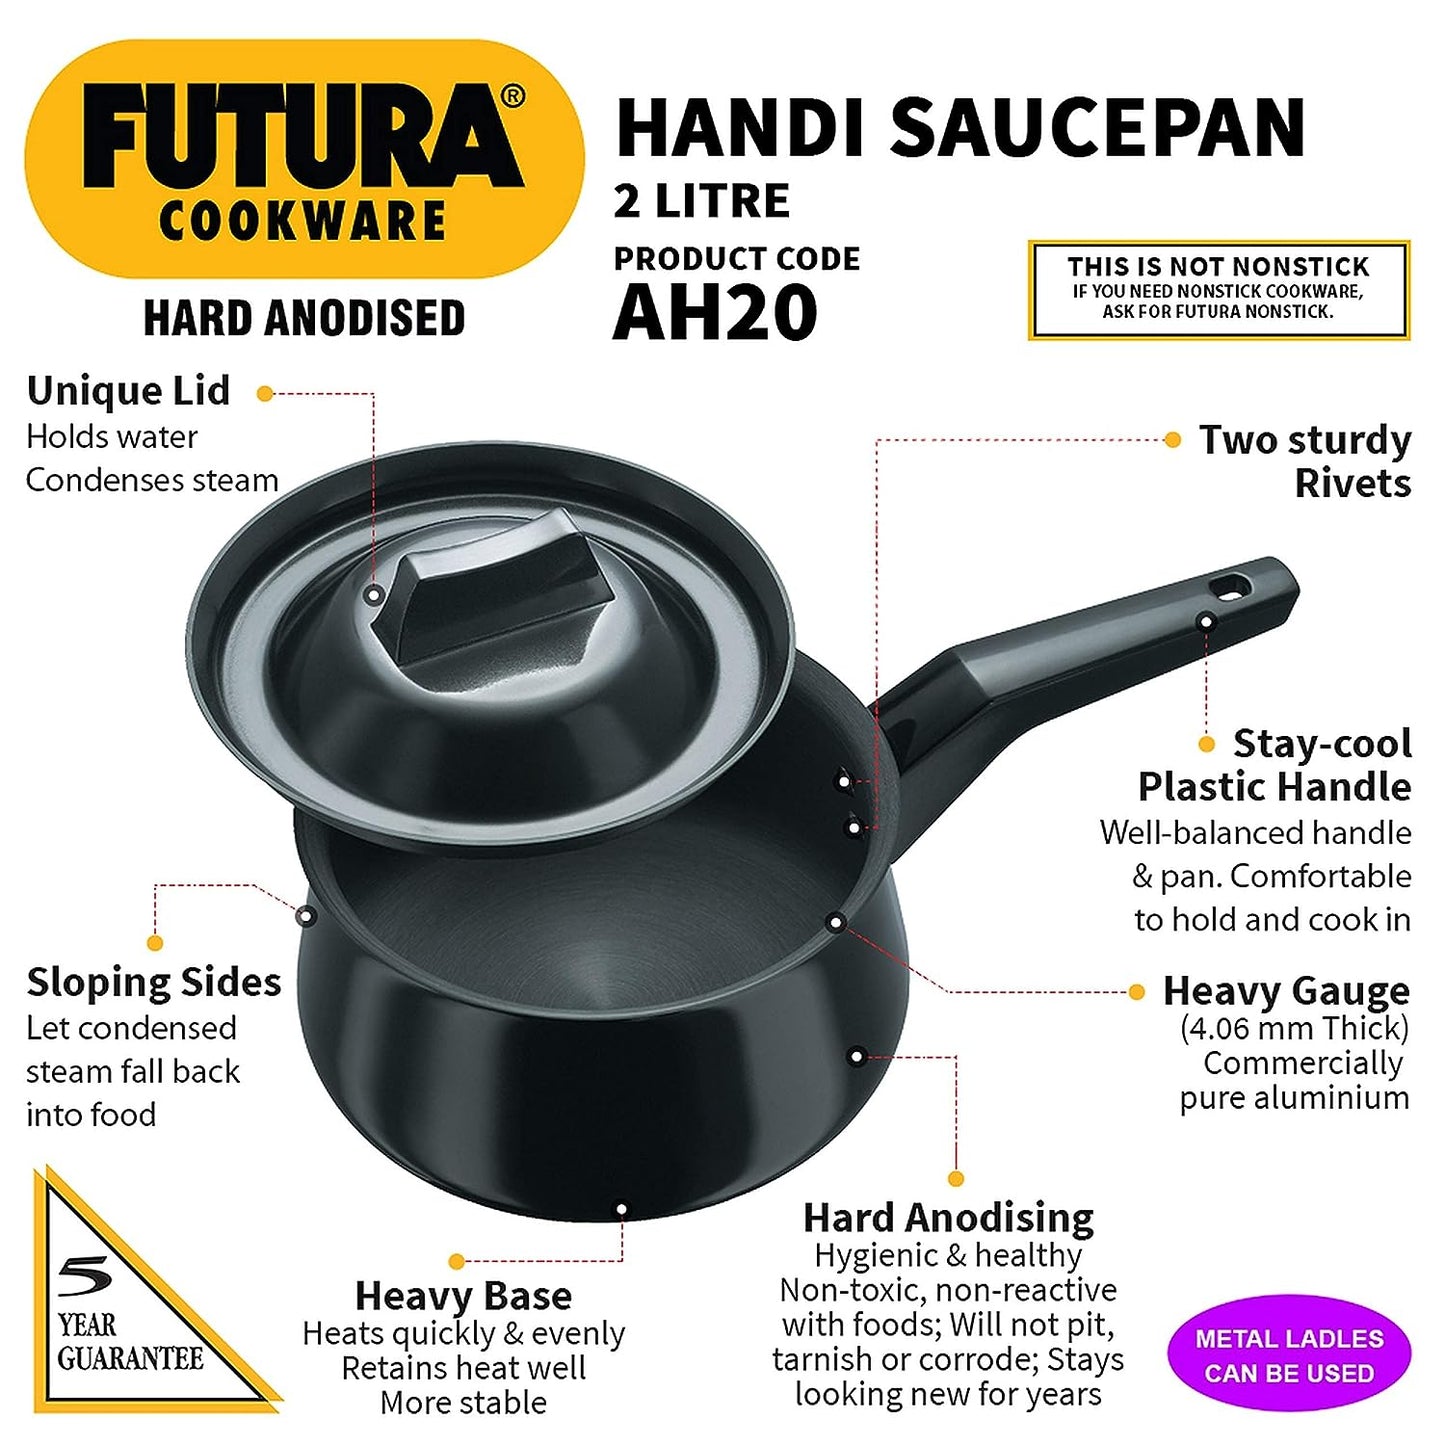 Hawkins Futura Hard Anodised Cook n Serve Handi (Sauce Pan) 2 Litres | 18cm, 4.06mm - AH 20